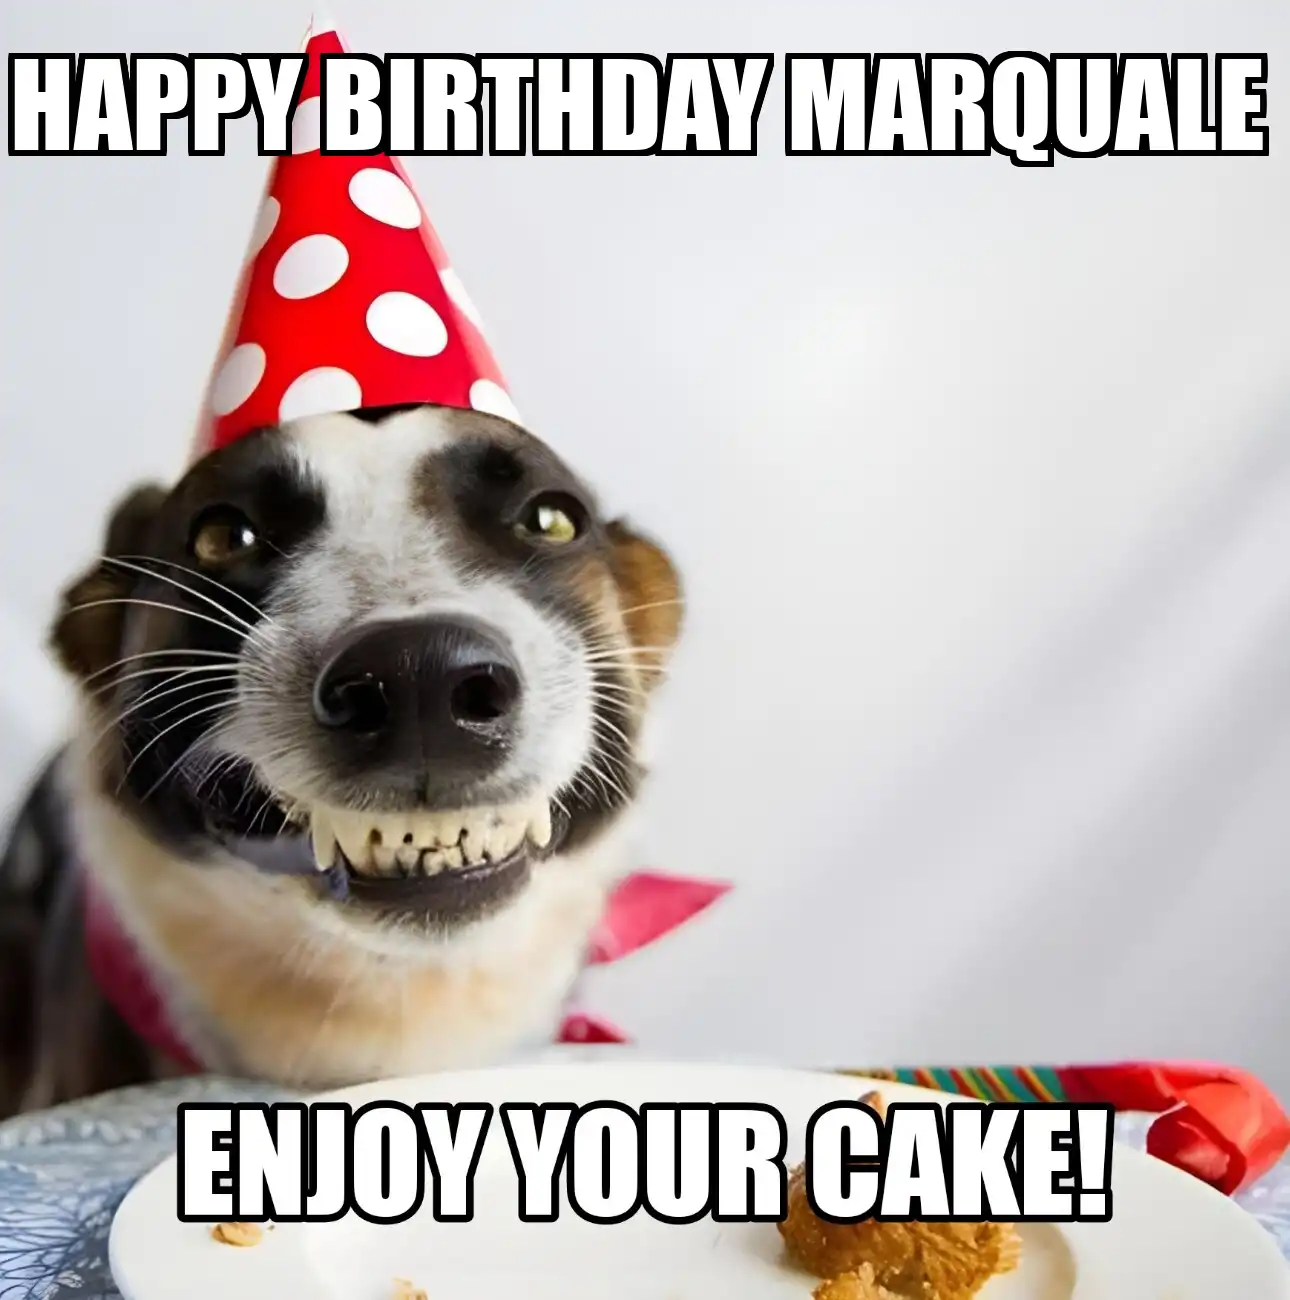 Happy Birthday Marquale Enjoy Your Cake Dog Meme